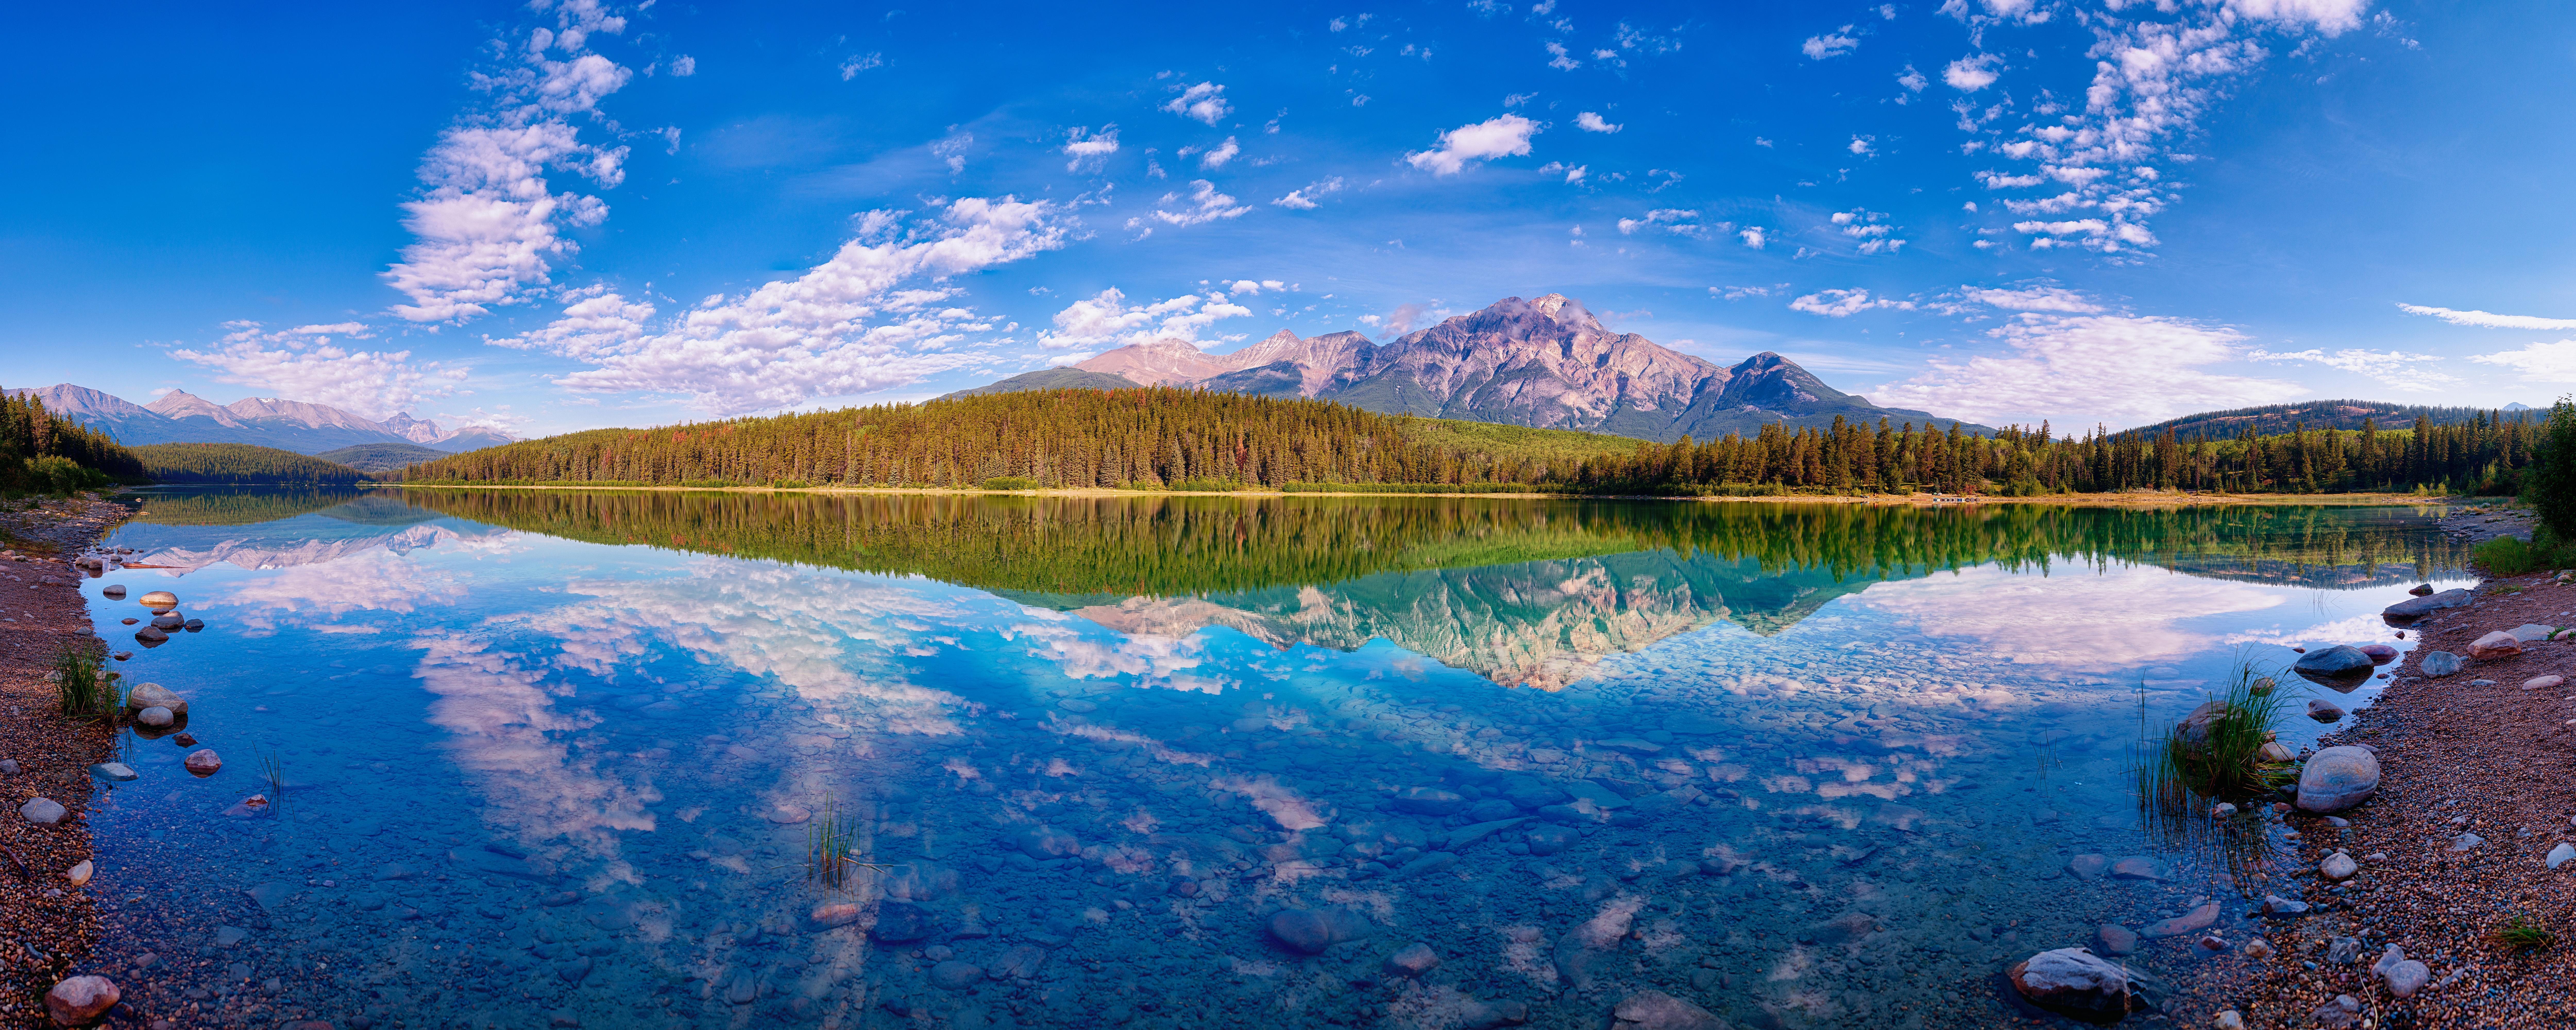 Lake panorama / 1440 x 900 / Landscape / Photography